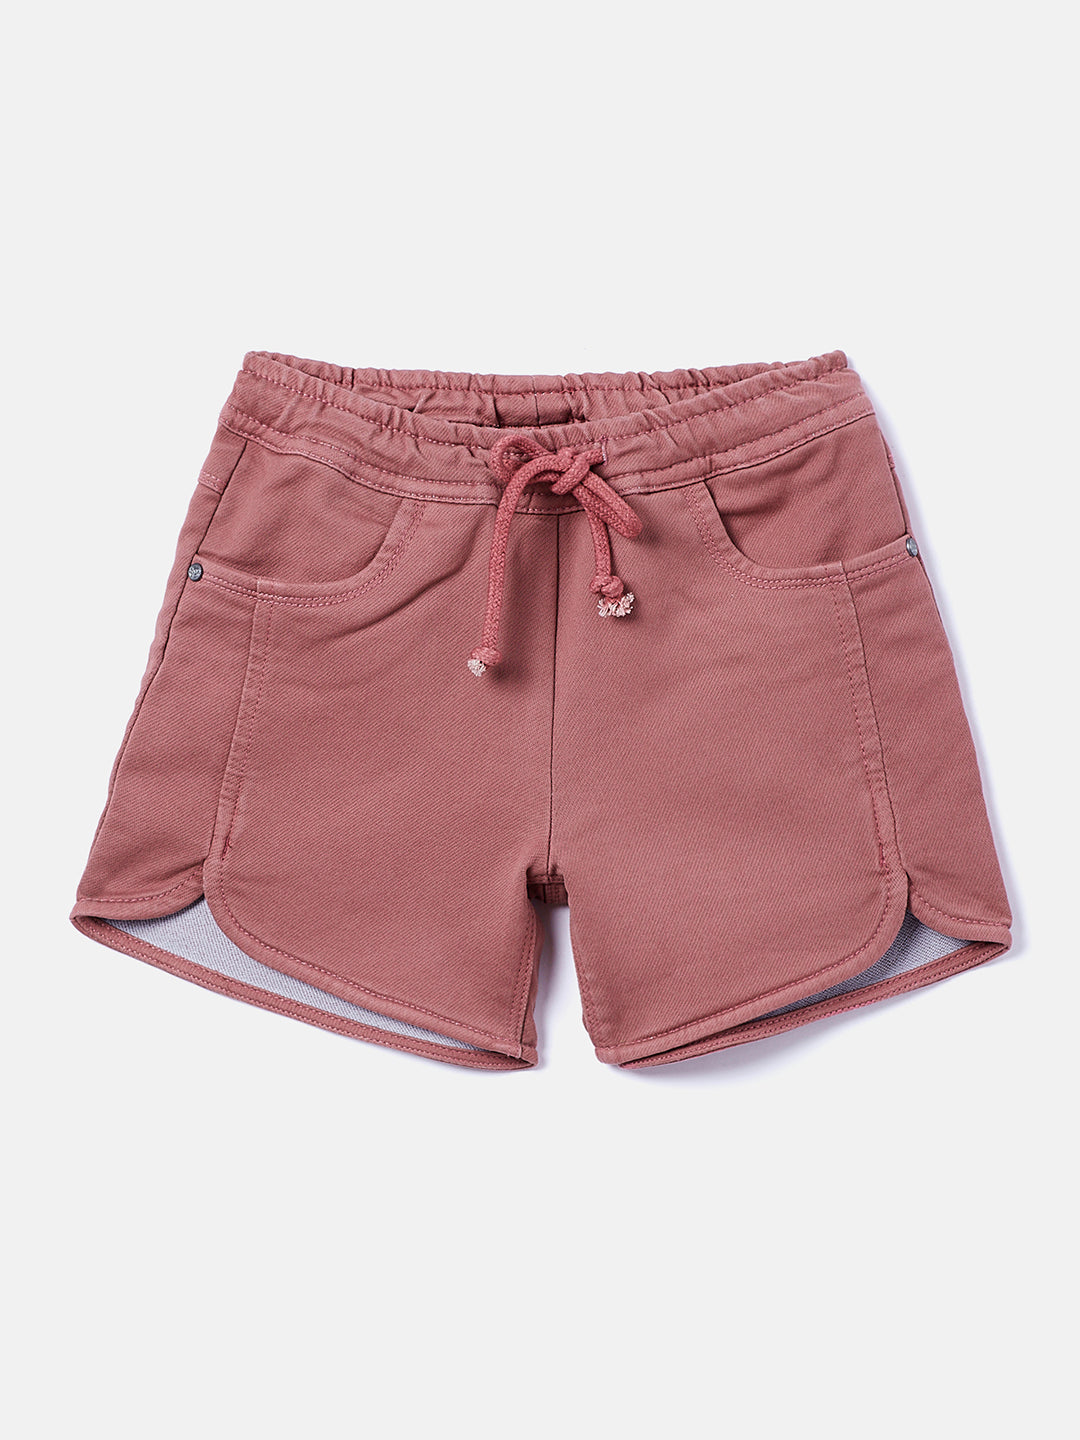 Pink Hot Pant - Girls Shorts